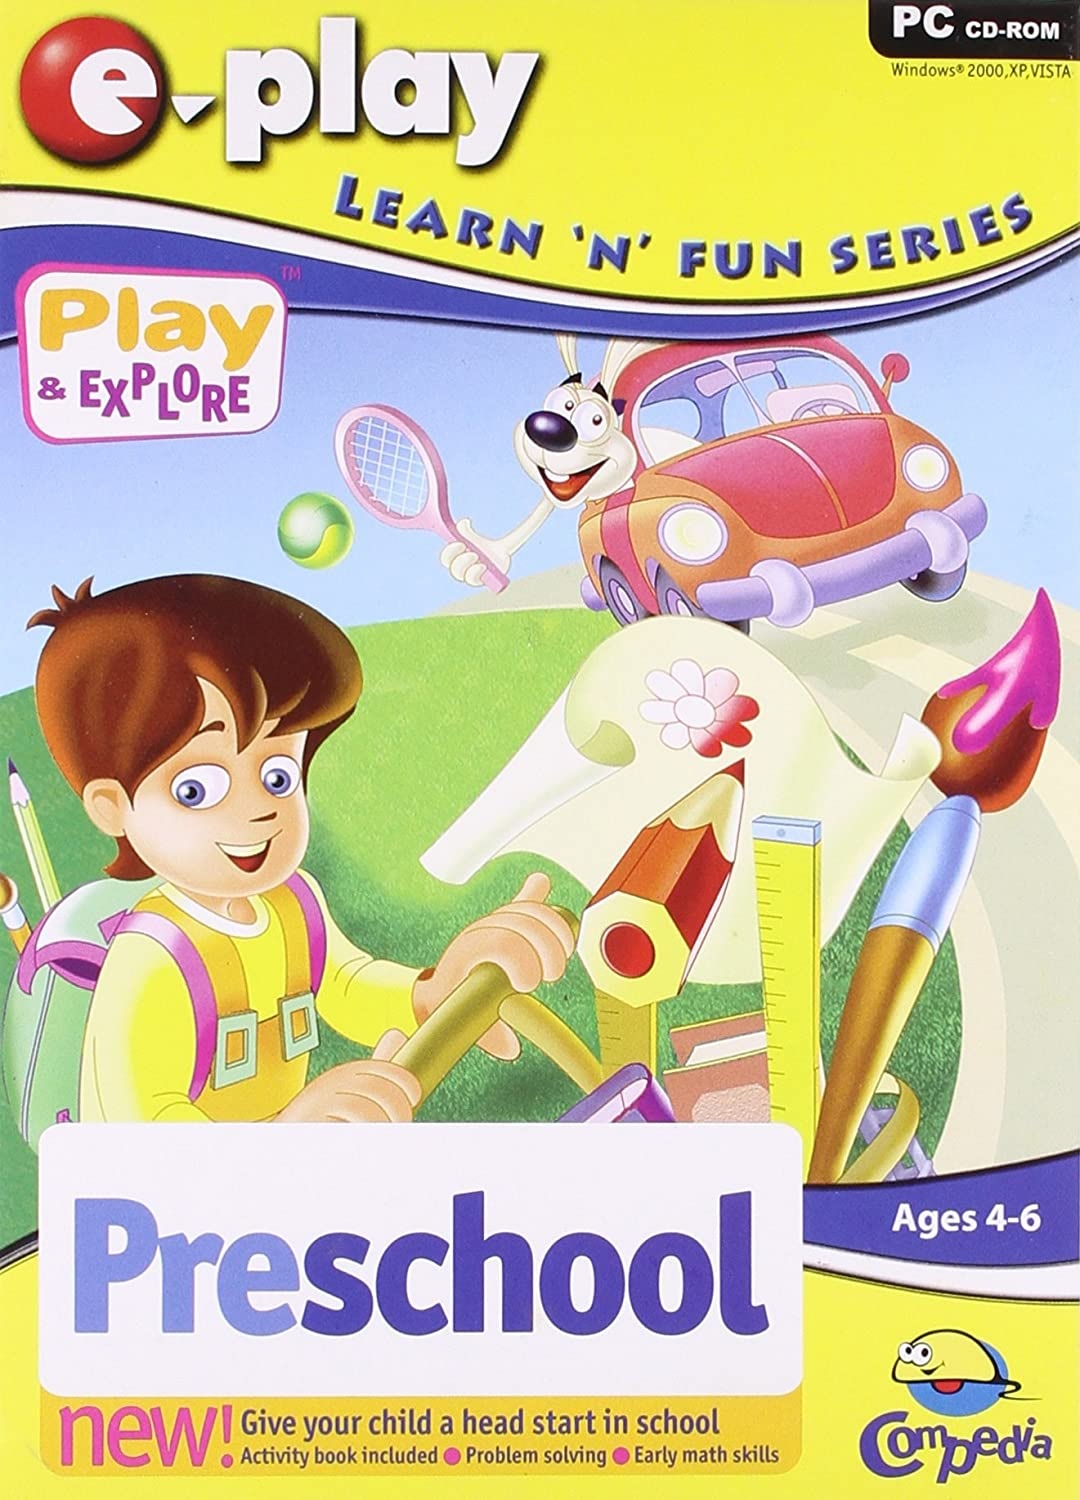 Compedia Preschool PC